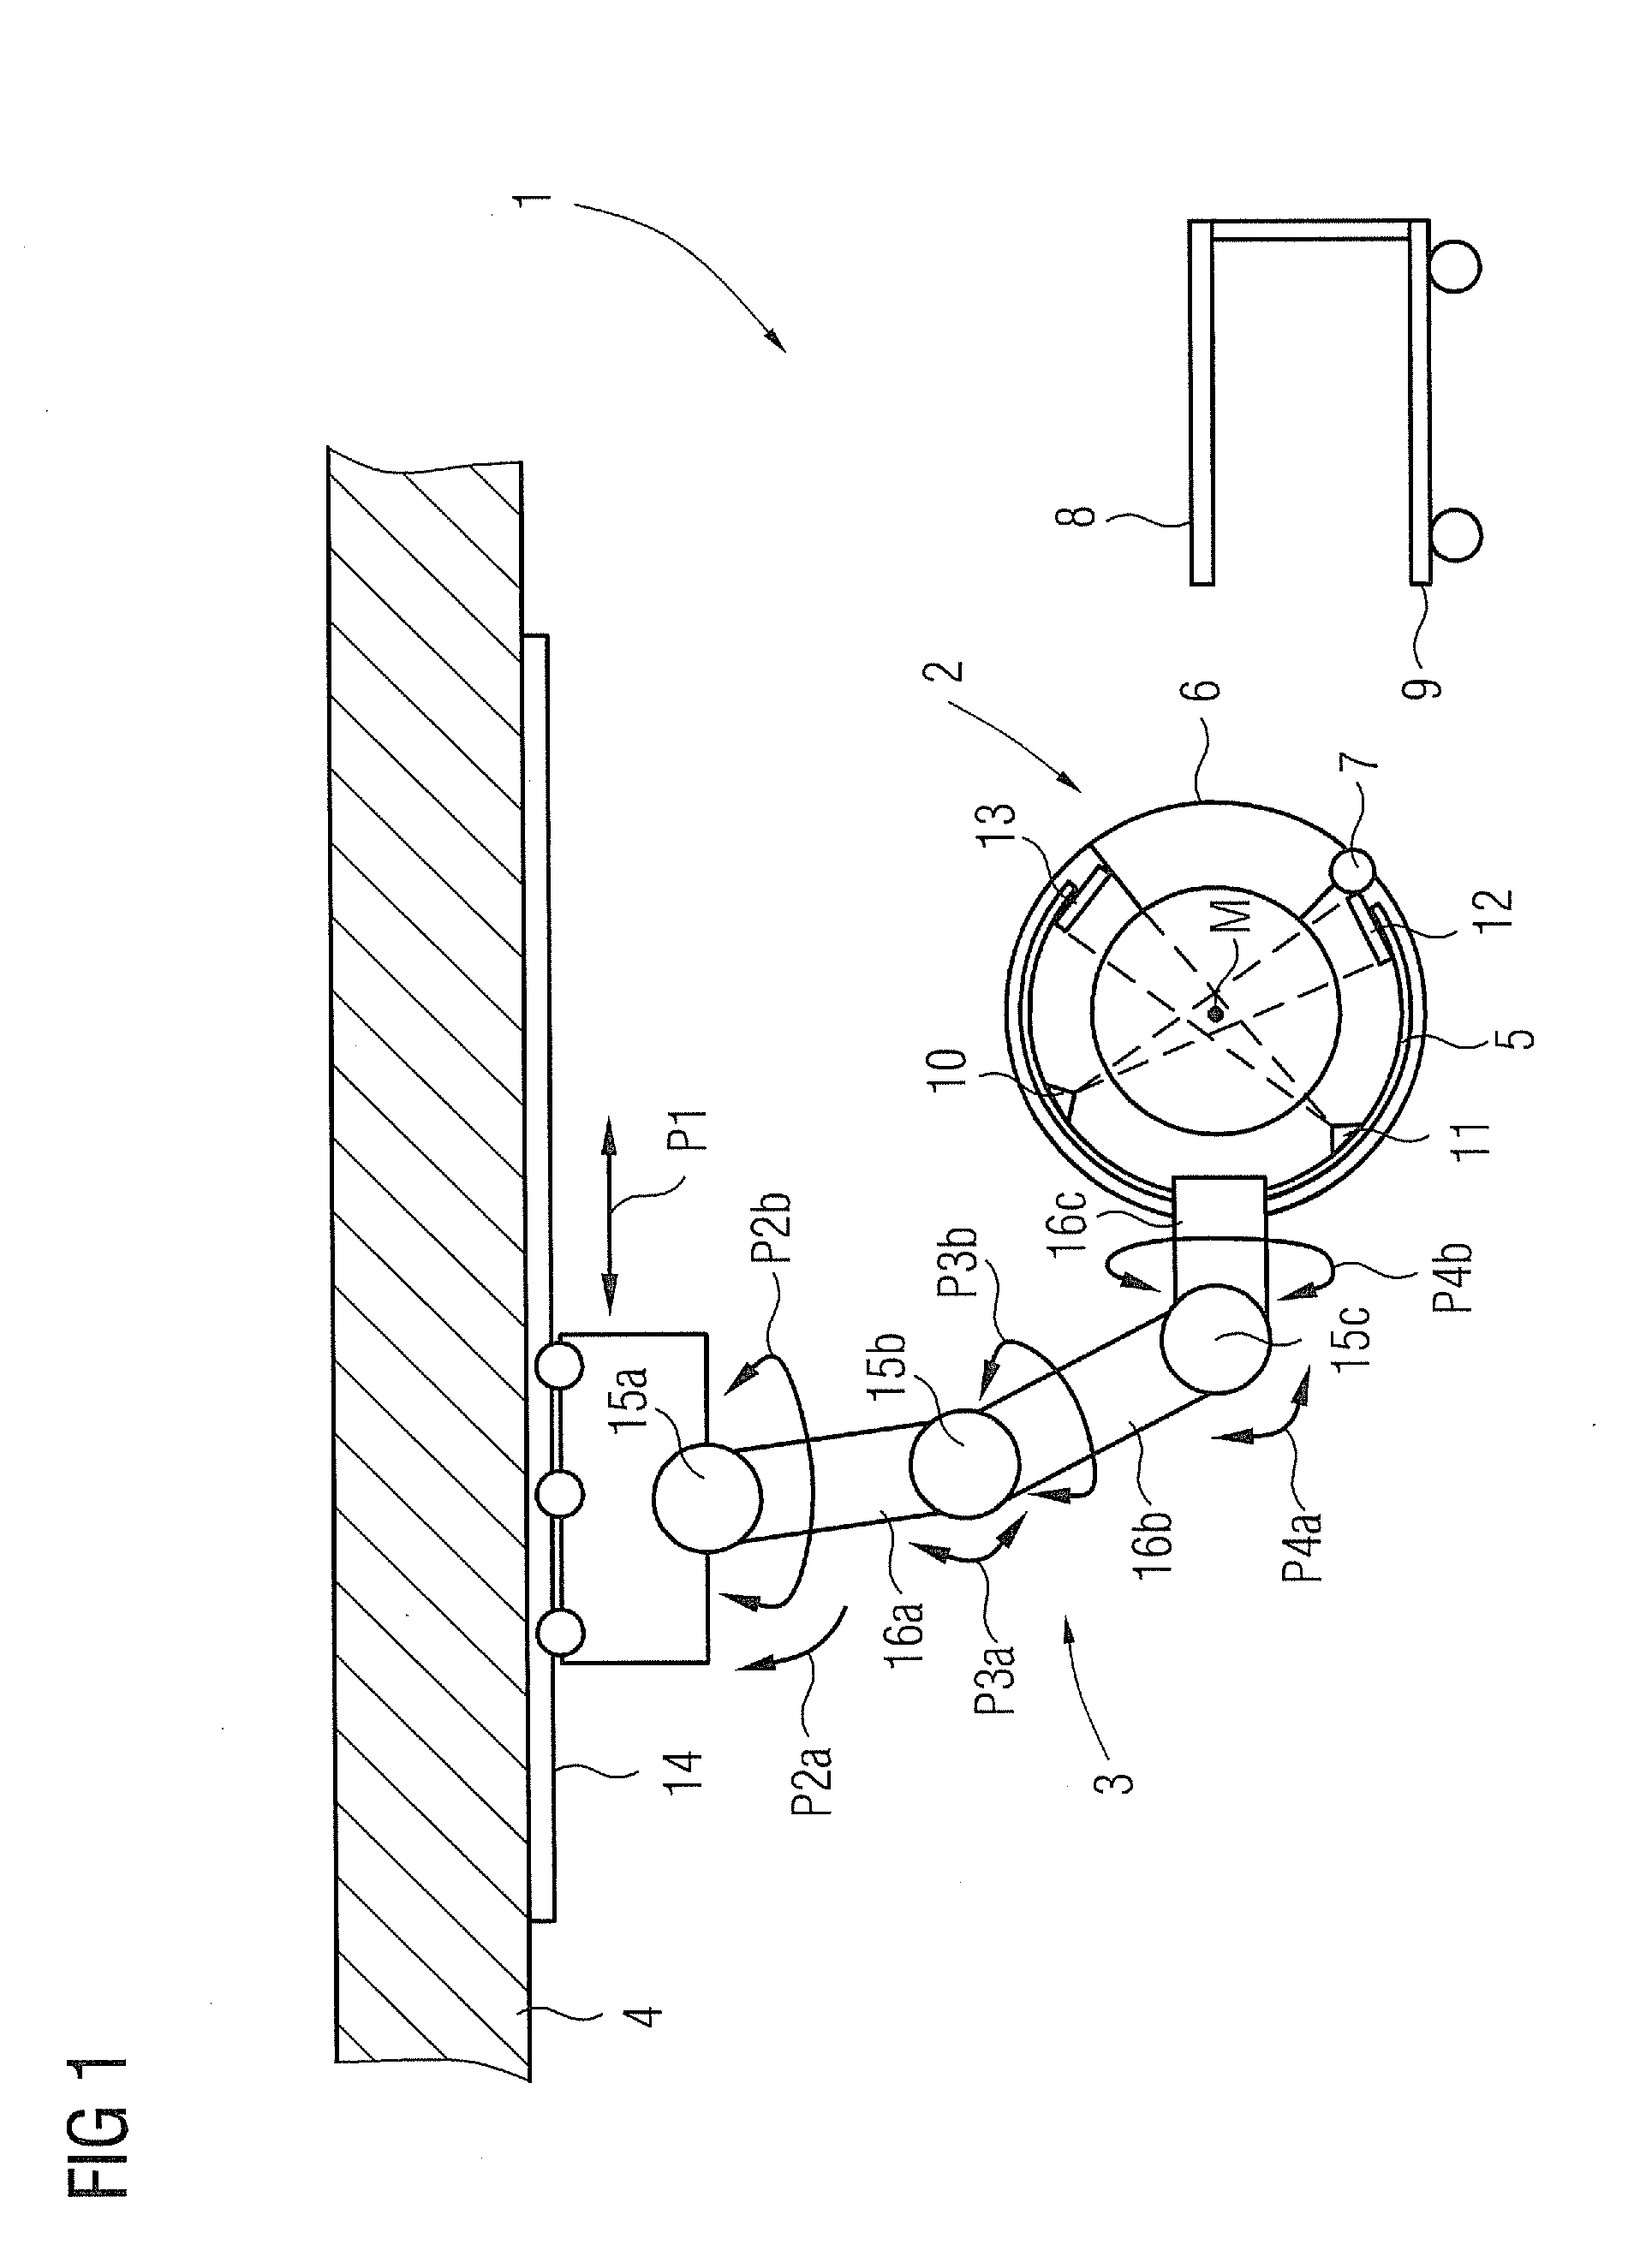 Imaging apparatus comprising a ring-shaped gantry